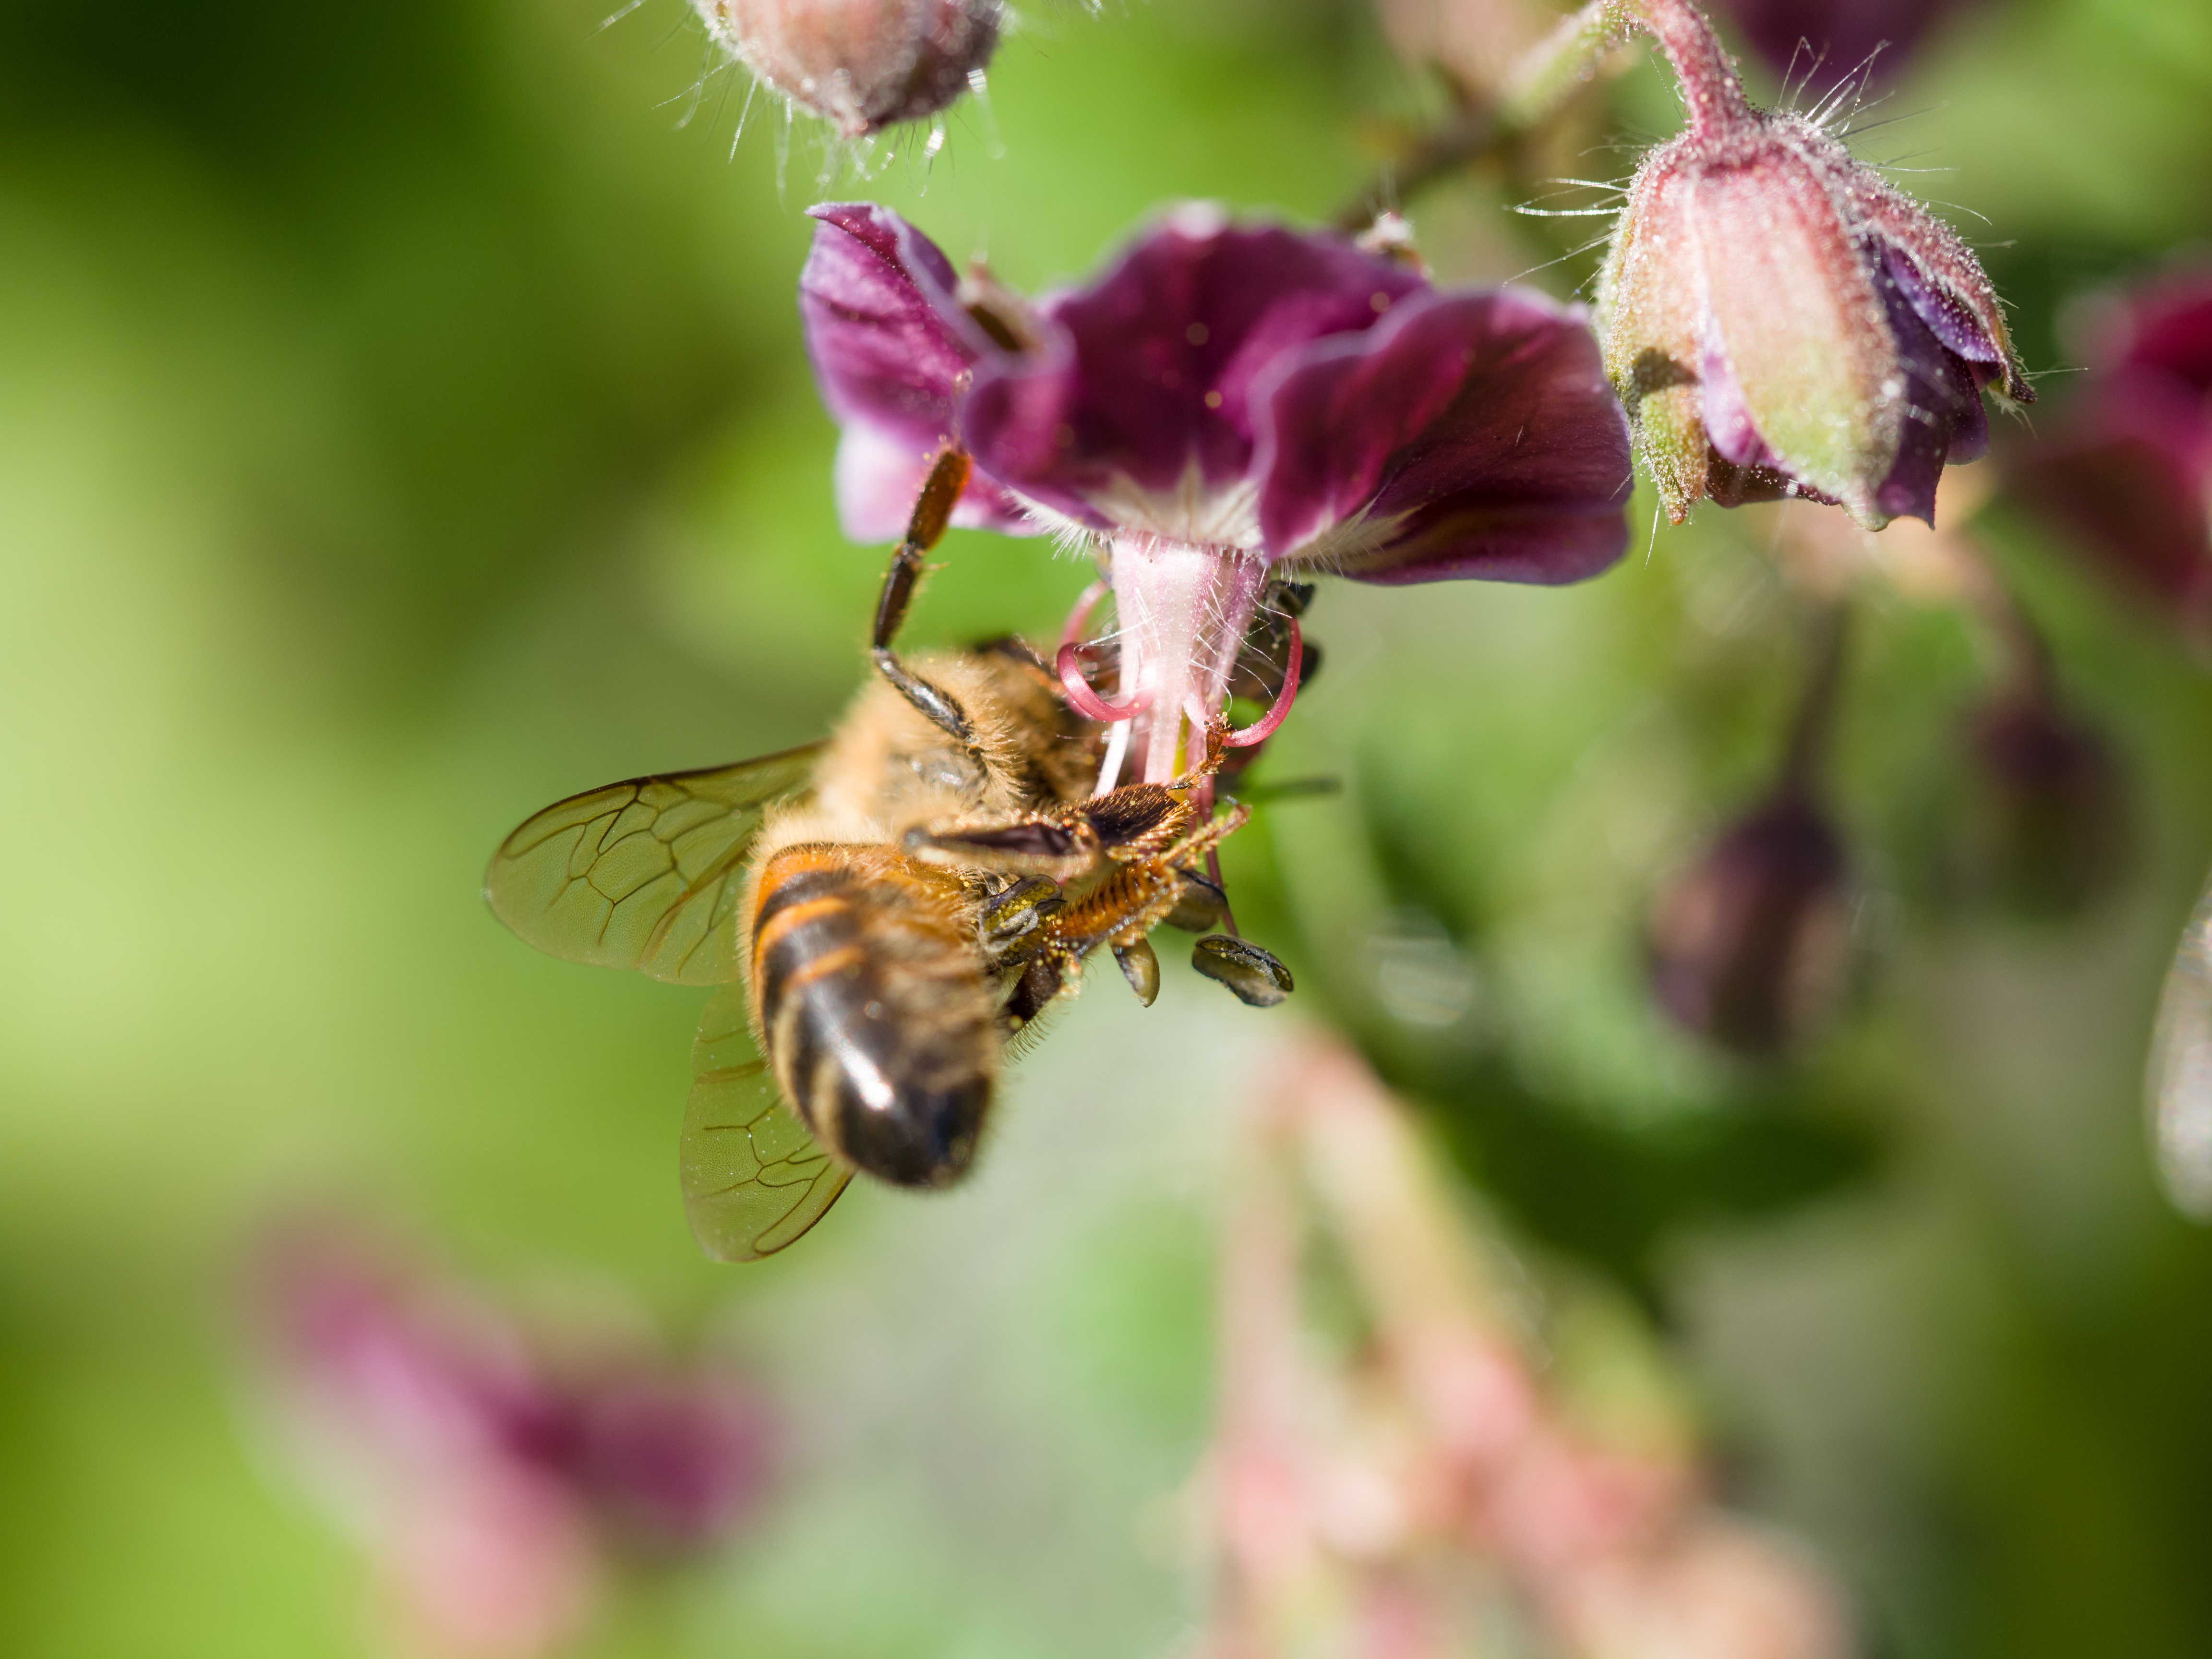 File:Bee gathering nectar (14114525691).jpg - Wikimedia Commons